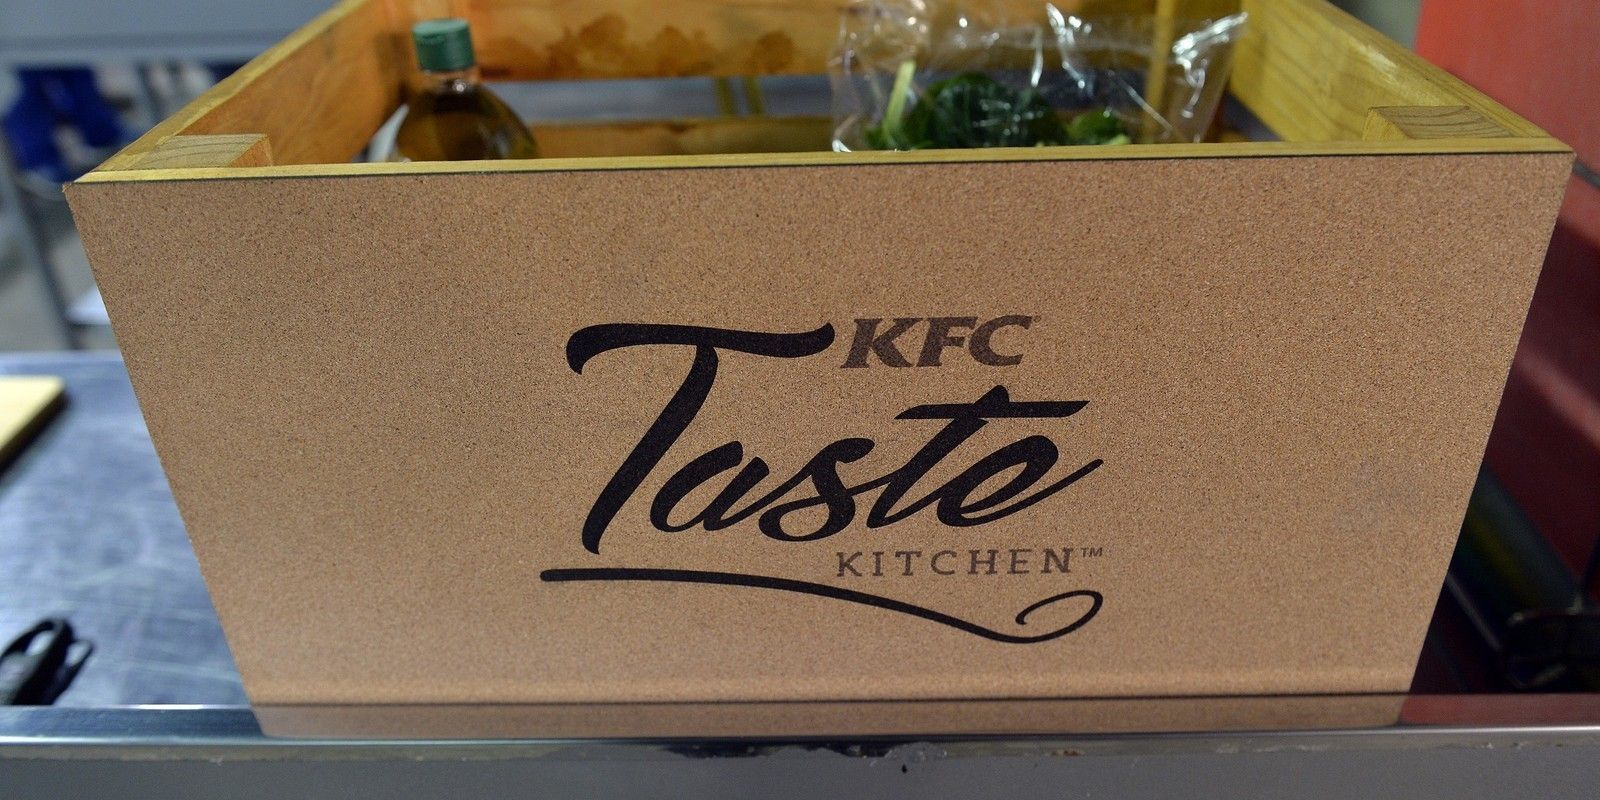 34 kfc taste kitchen box 004 pre